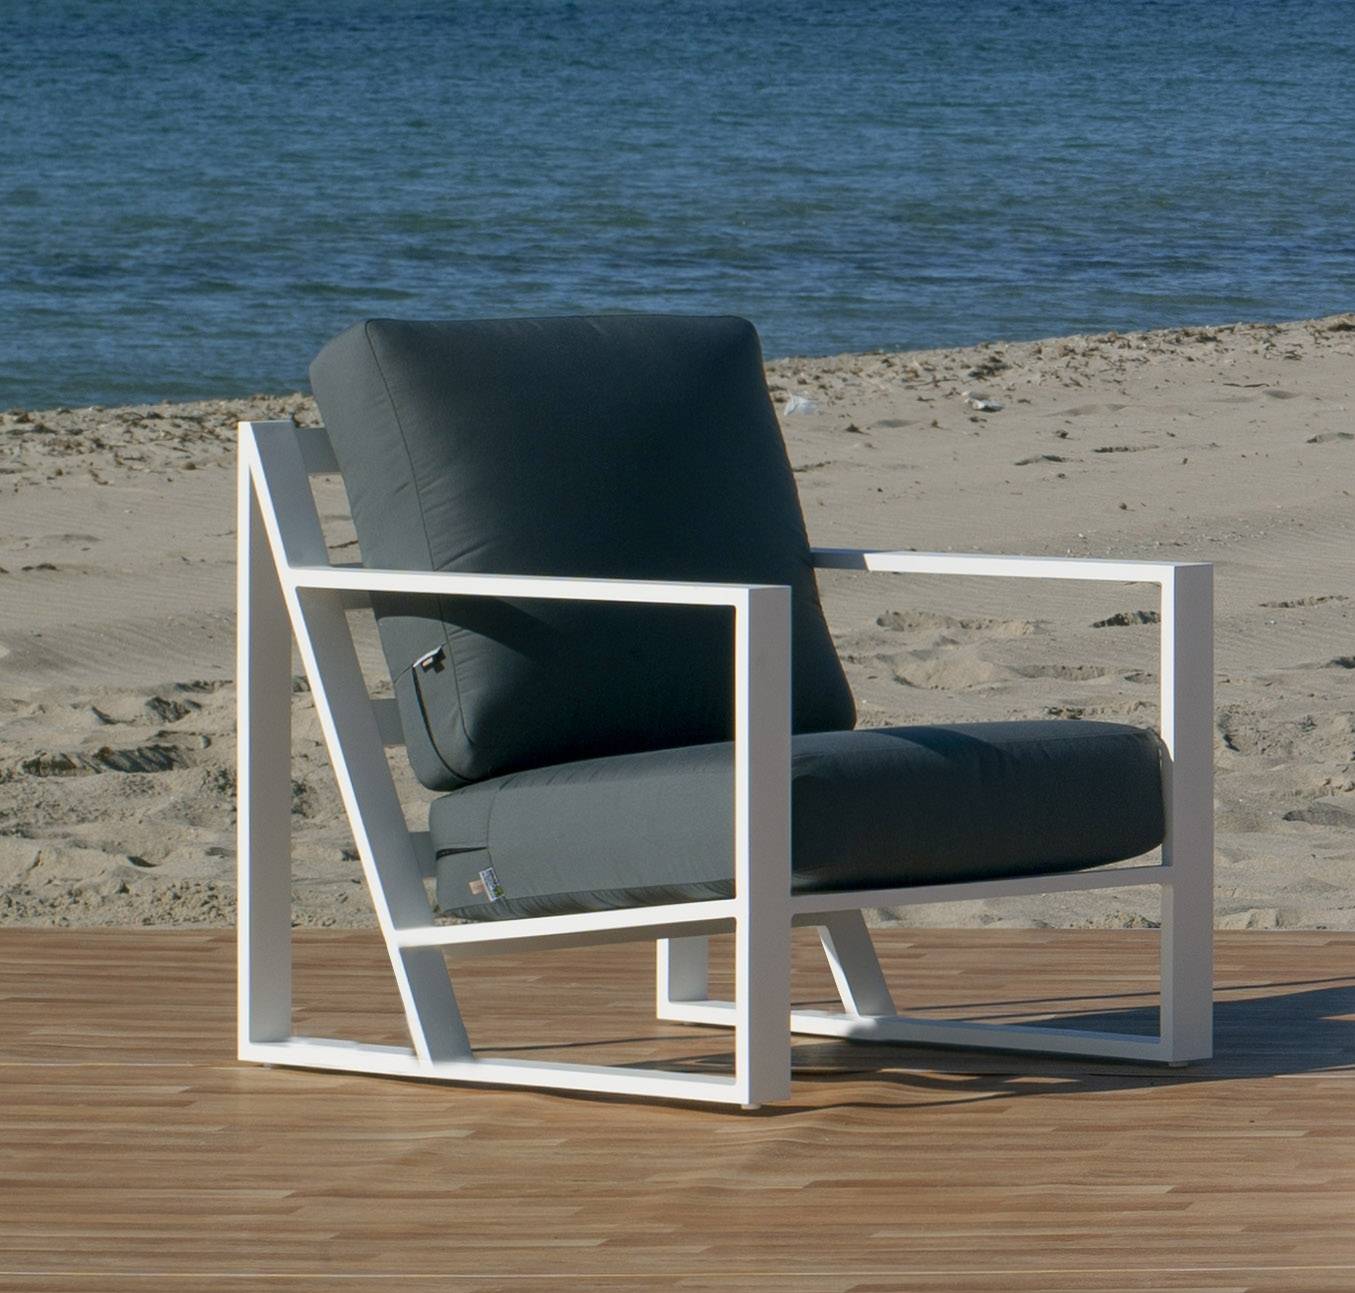 Set Aluminio Luxe Aleli-8 - Lujoso conjunto de aluminio: 1 sofá de 3 plazas + 2 sillones + 1 mesa de centro + cojines.